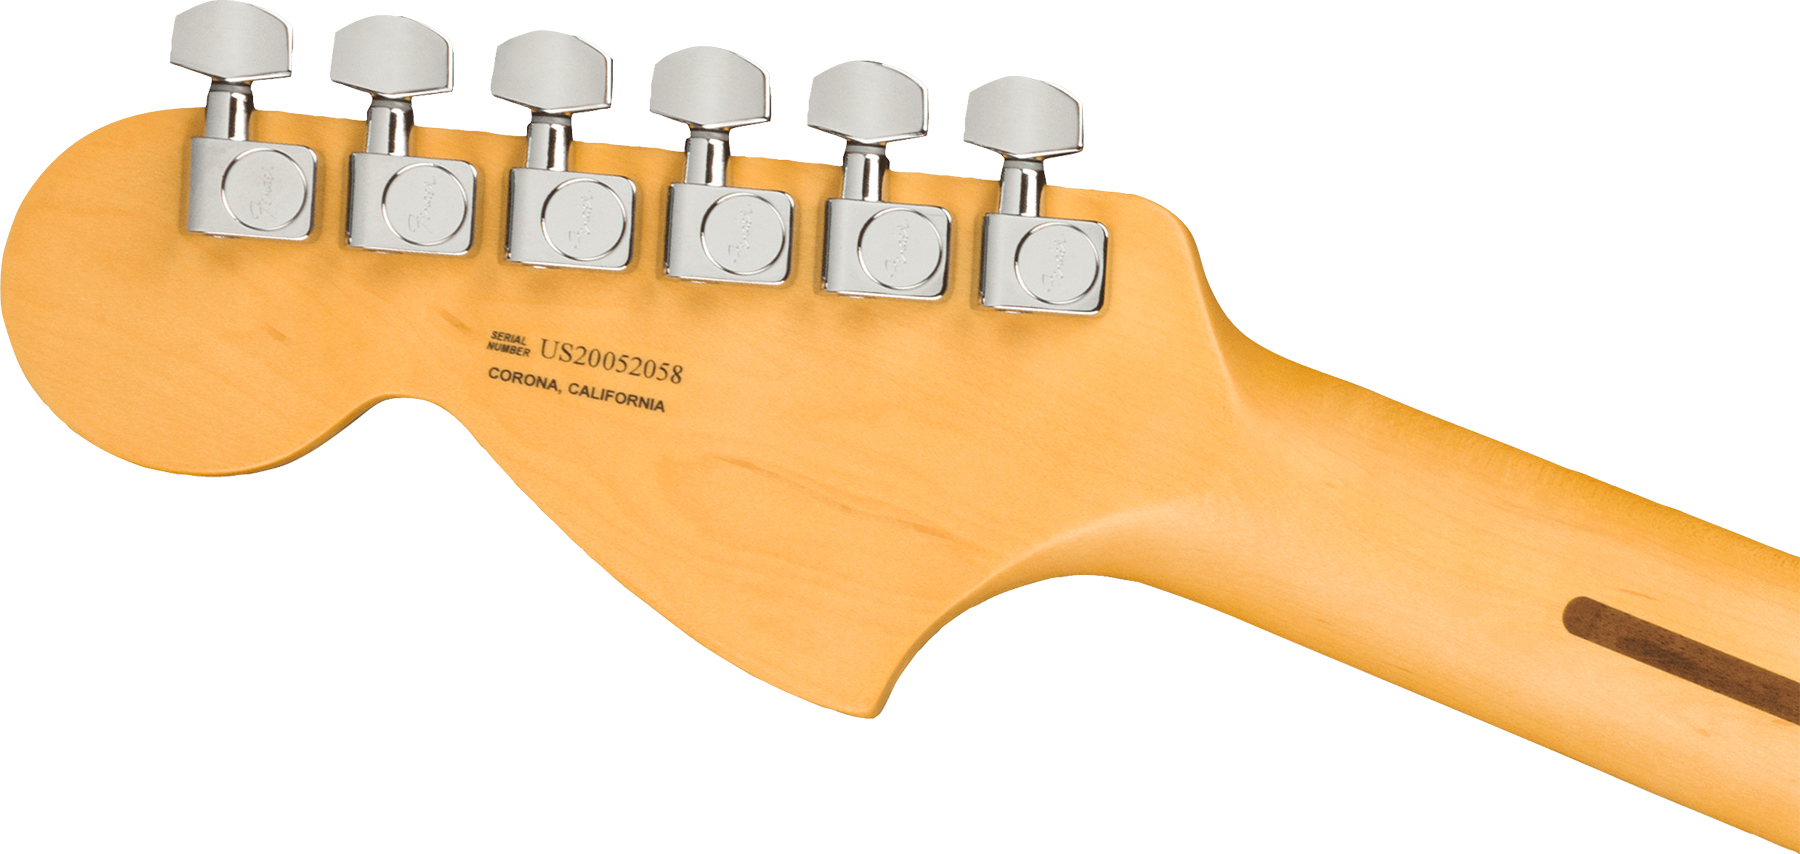 Fender Tele Deluxe American Professional Ii Usa Mn - Olympic White - Guitarra eléctrica con forma de tel - Variation 1